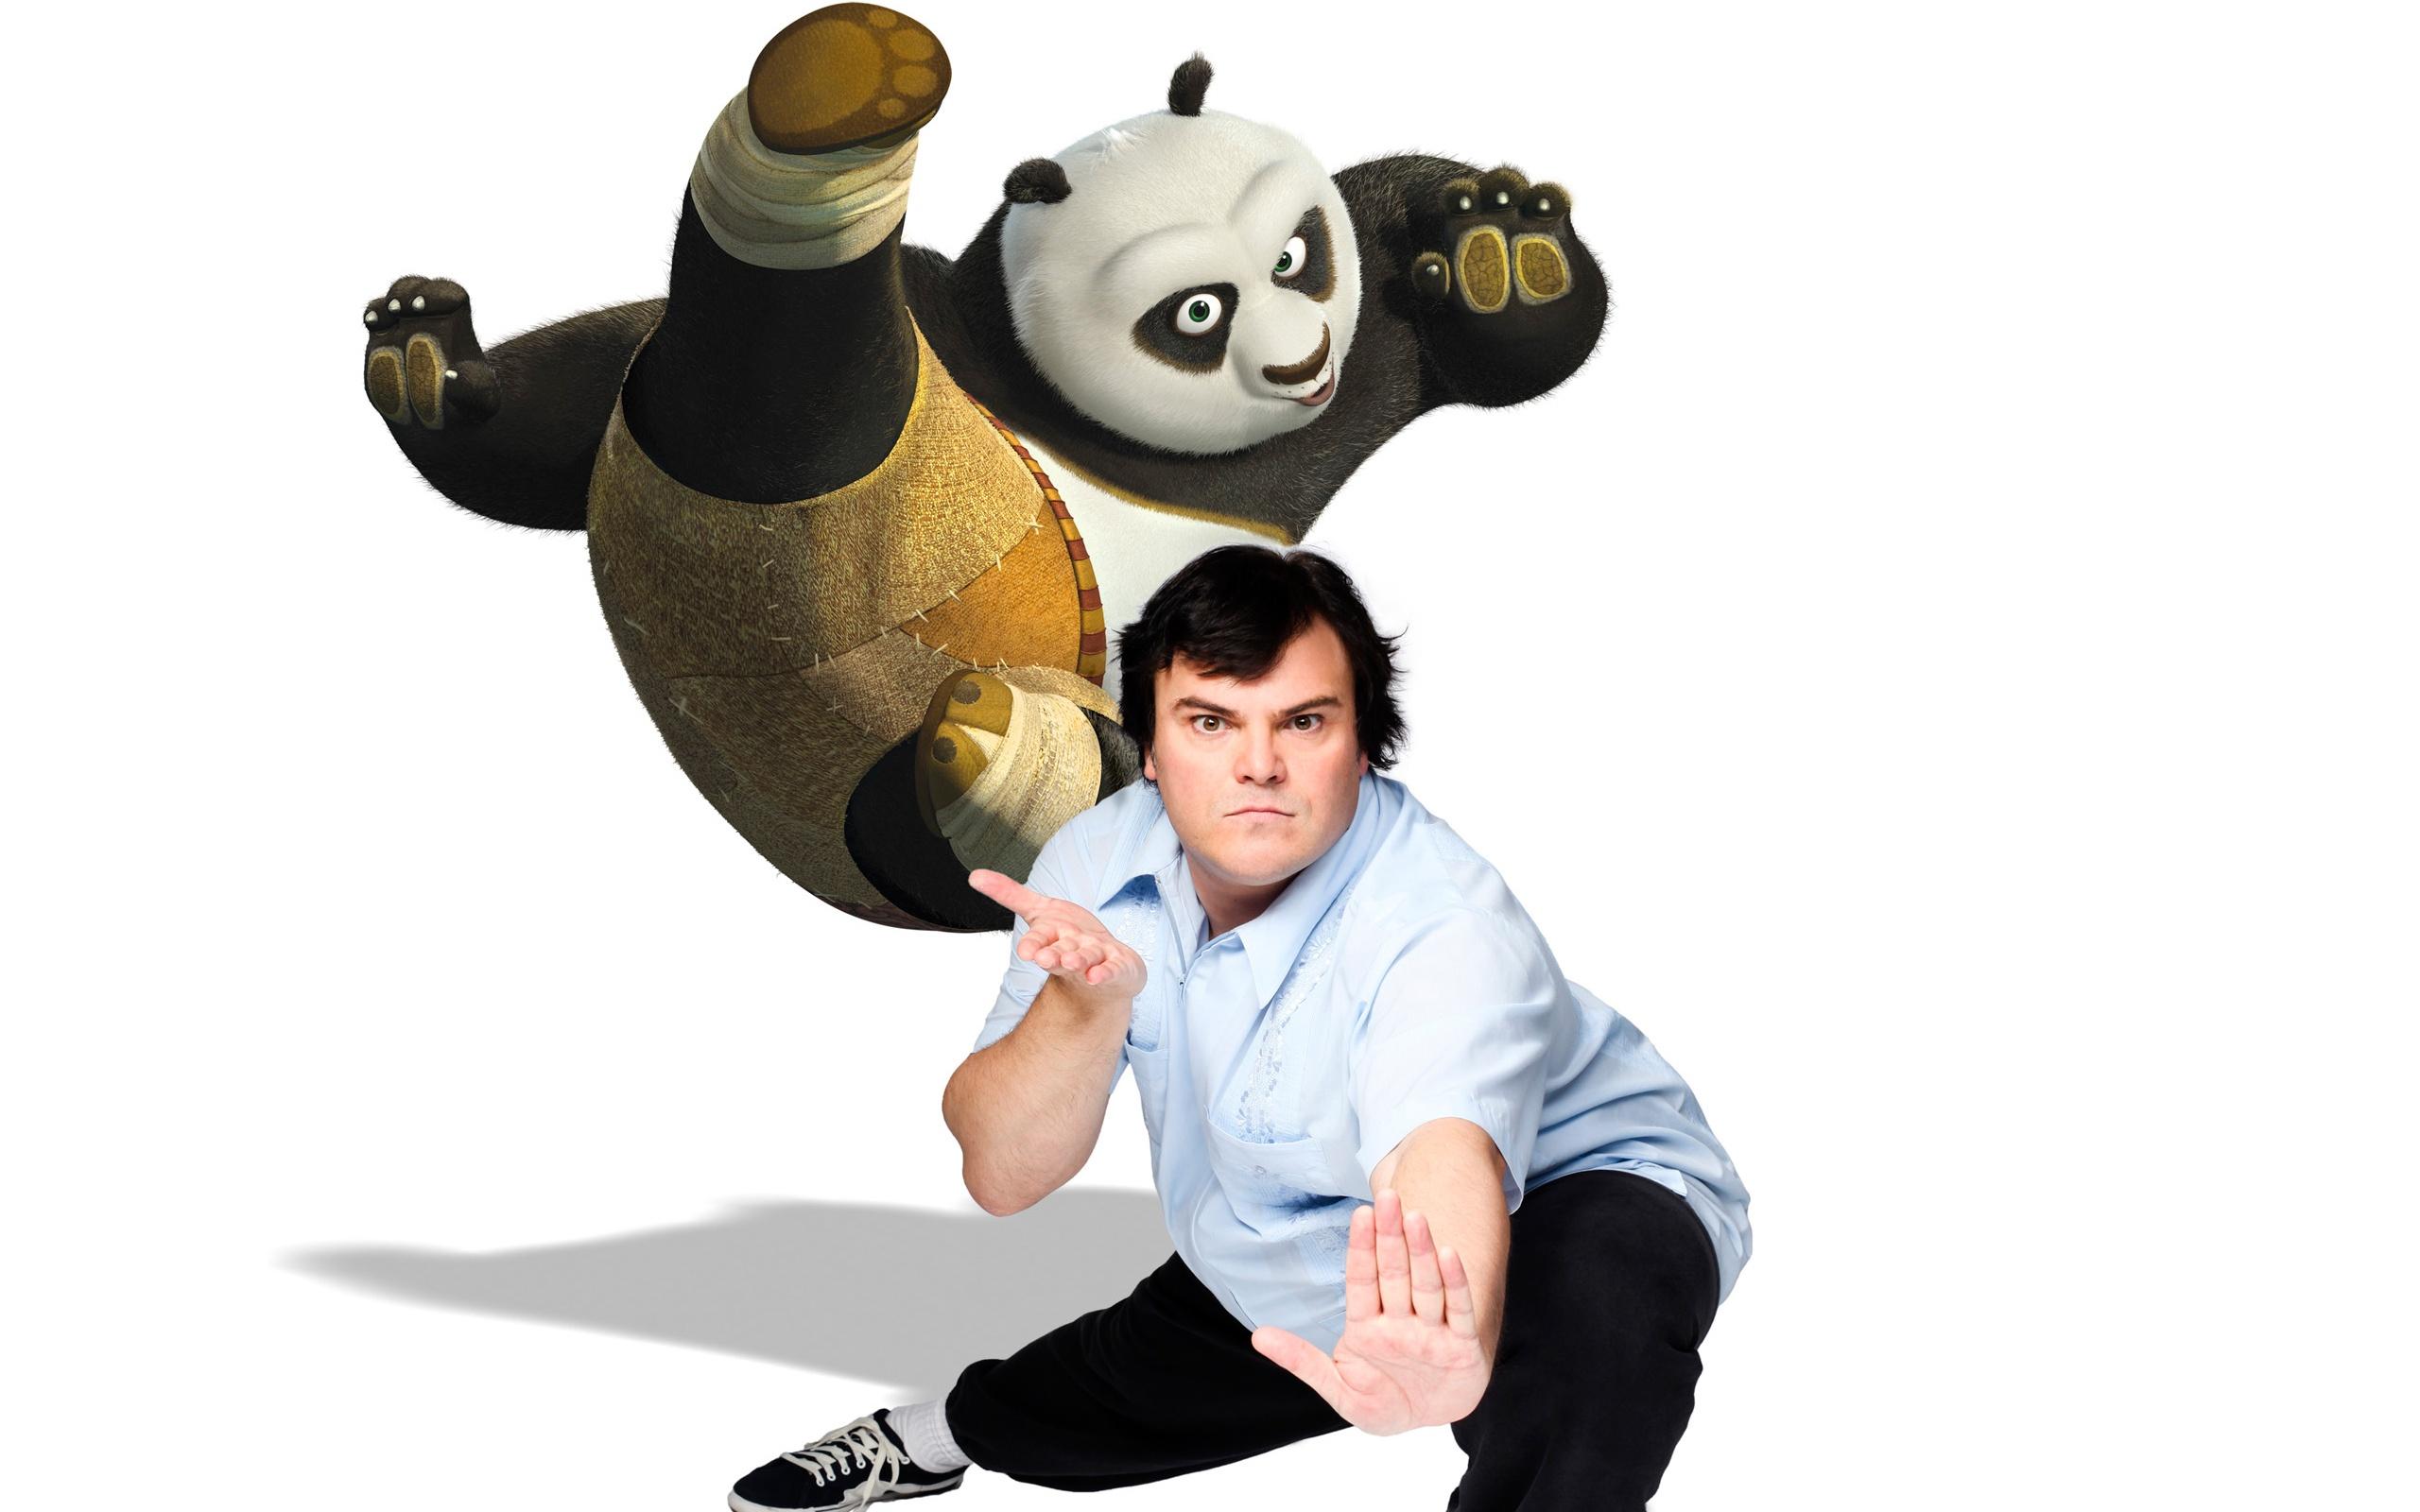 Jack Black as Panda Wallpaper in jpg format for free download